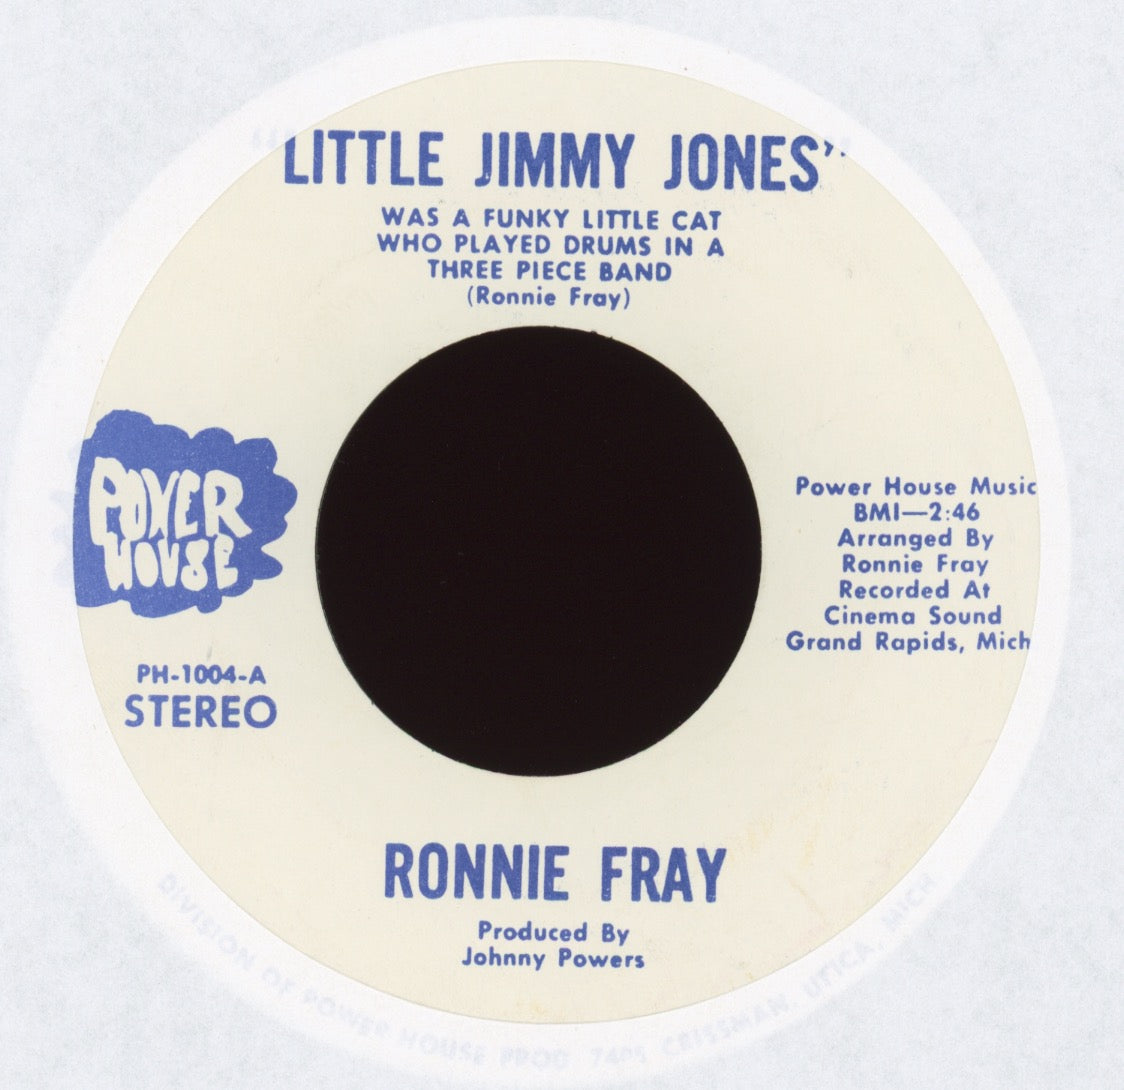 Ronnie Fray - Little Jimmy Jones on Power House